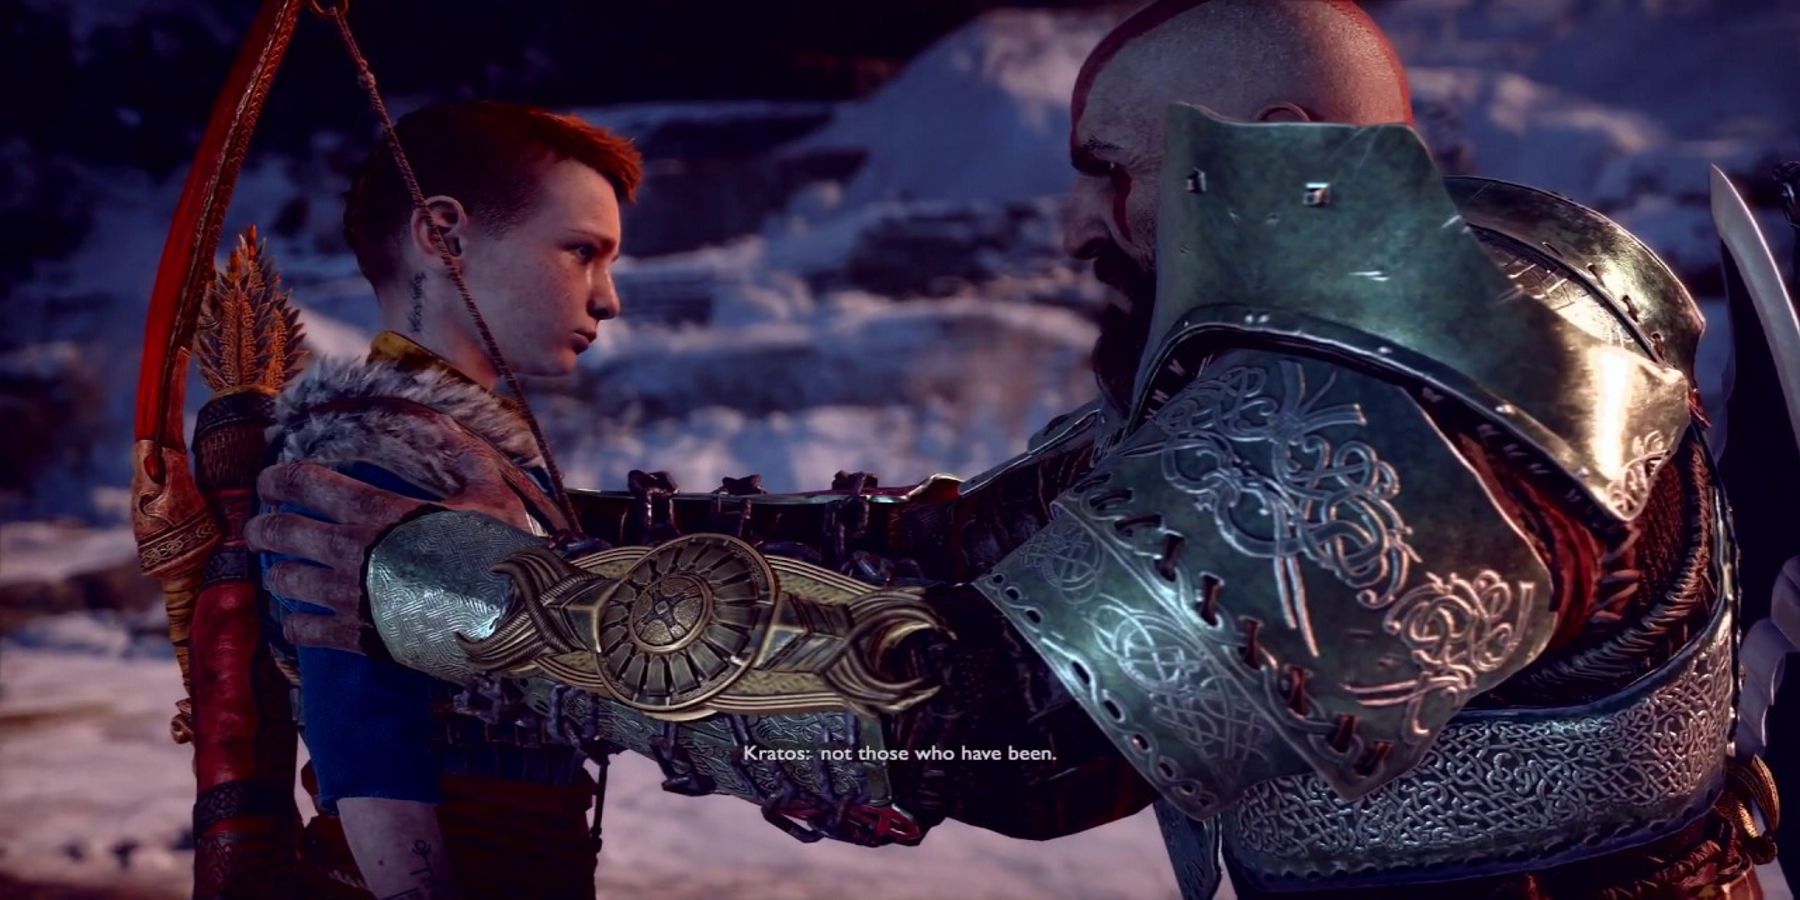 Kratos reveals his past